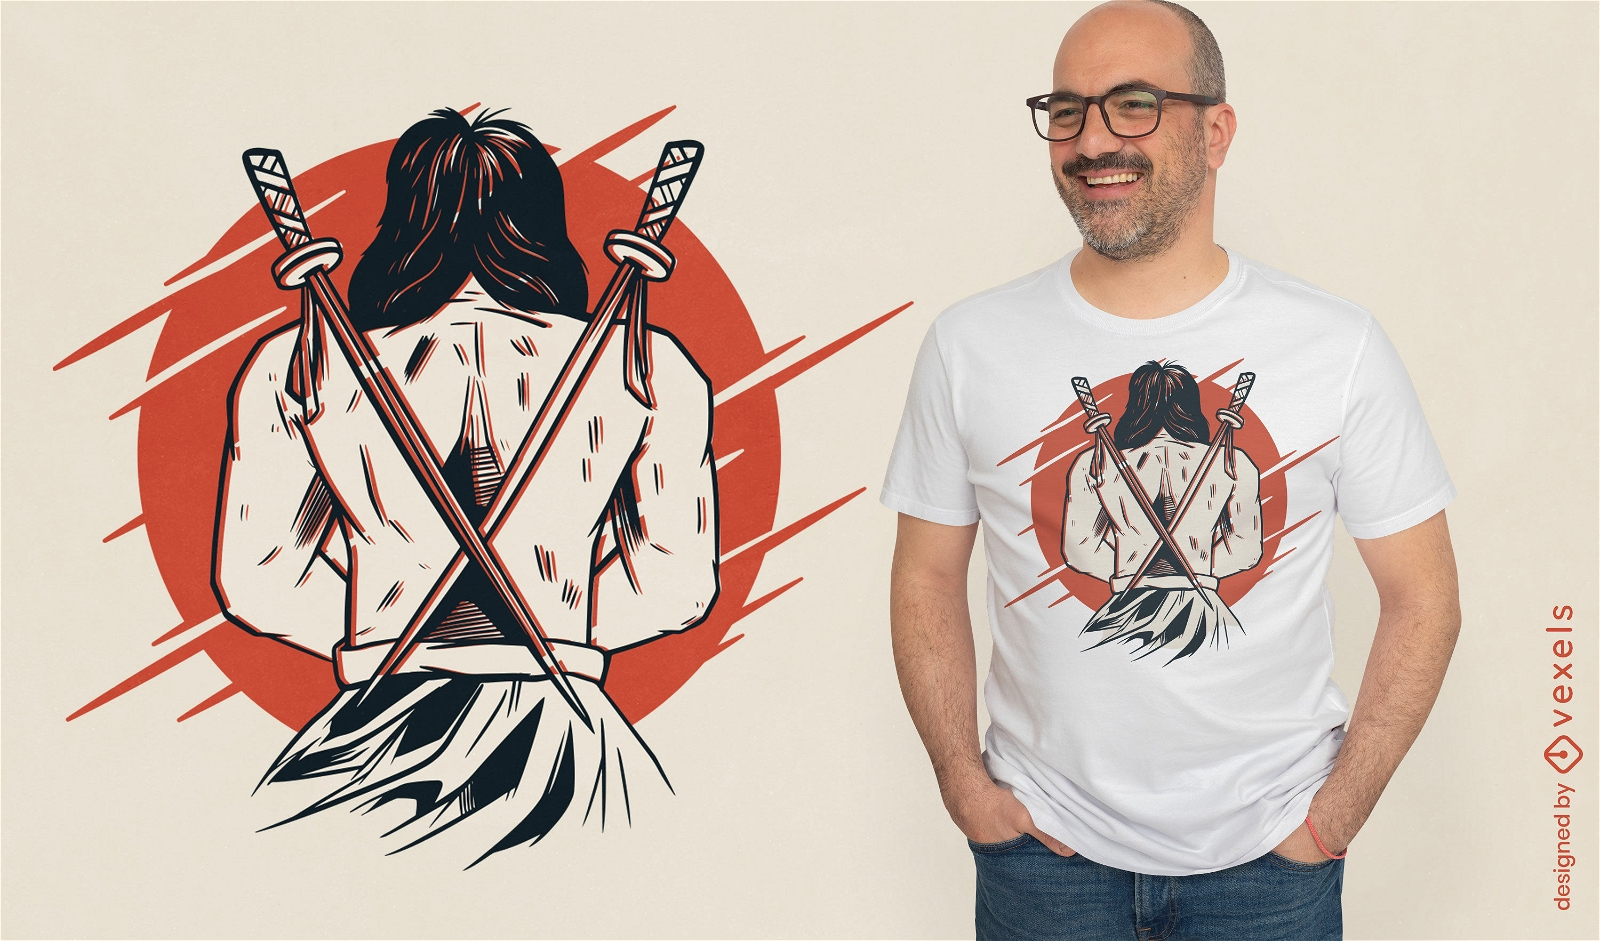 Samurai back swords t-shirt design